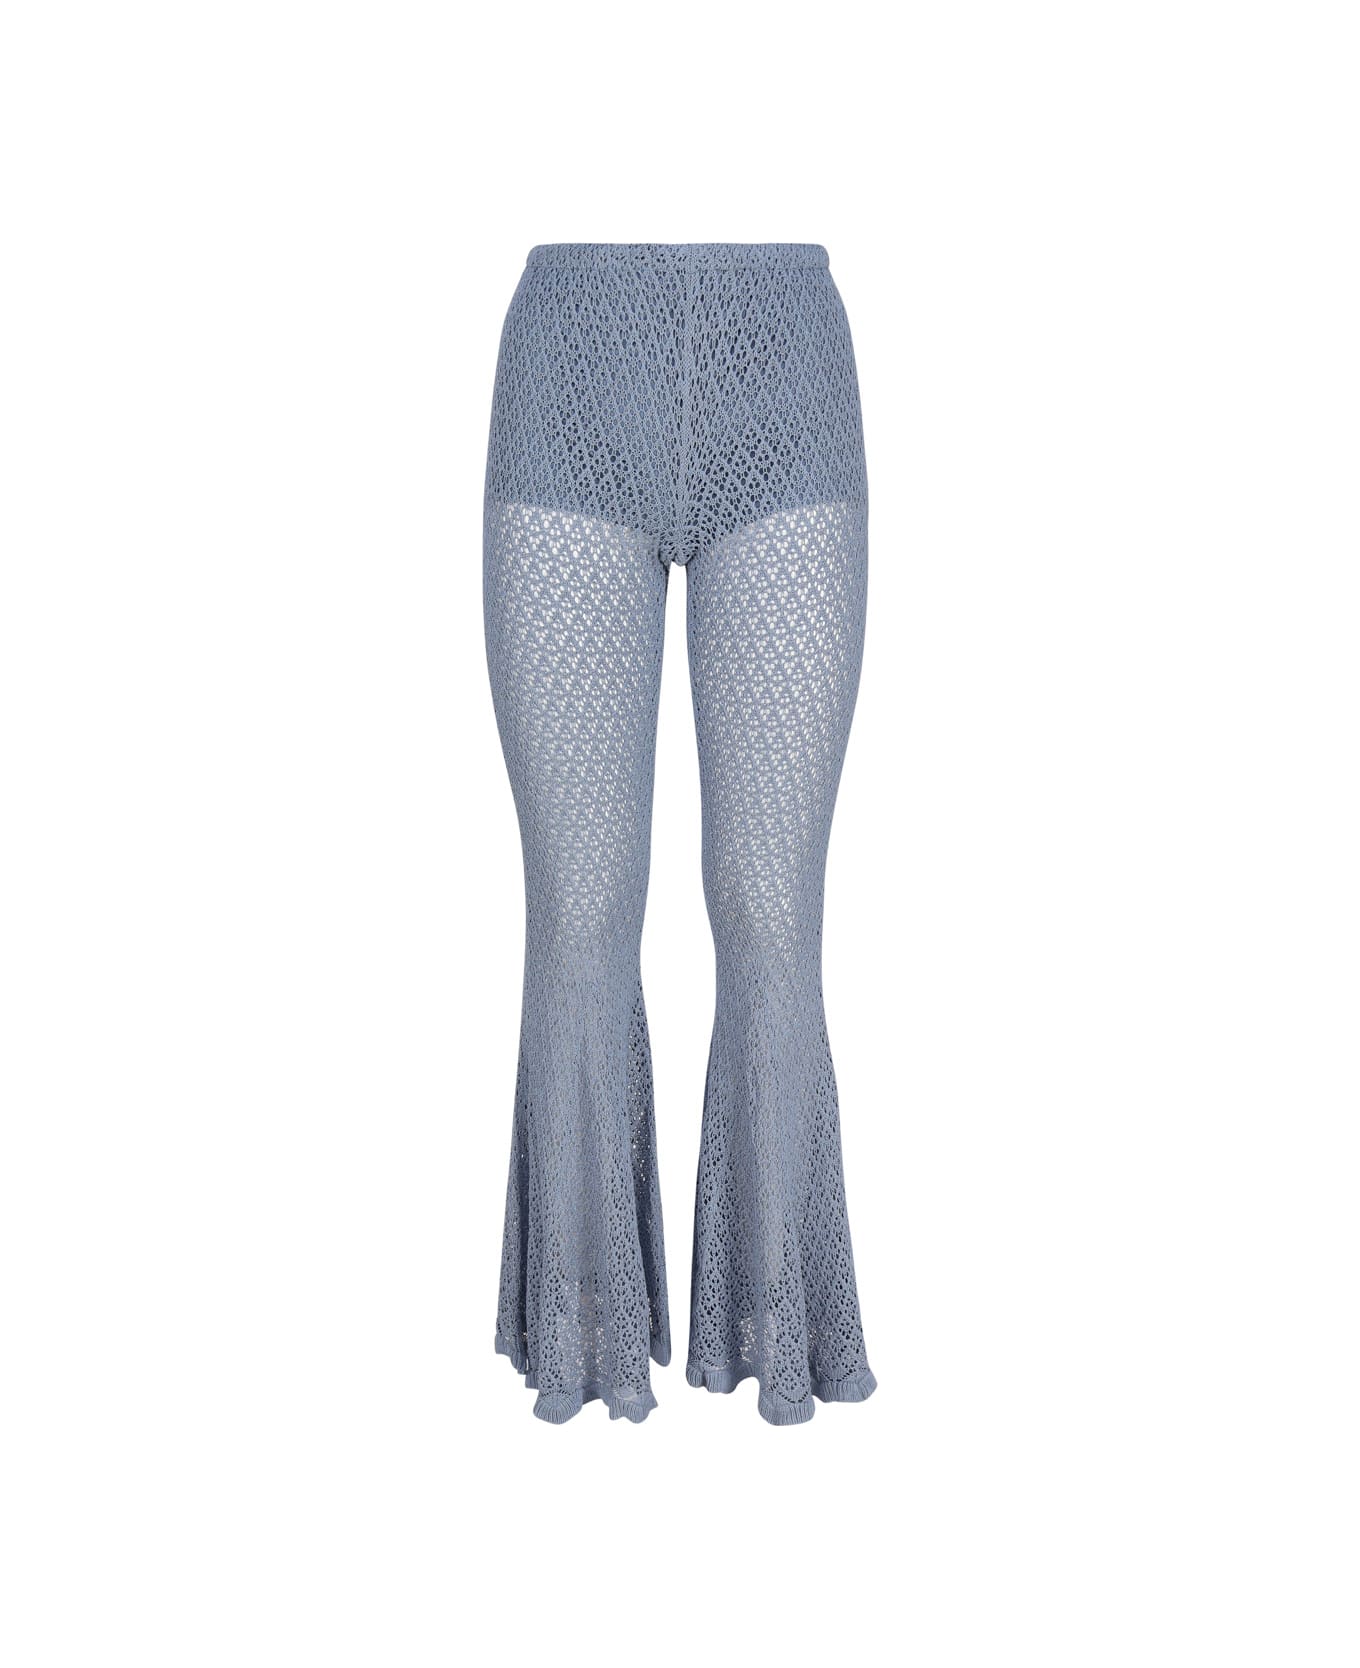 Blumarine Crochet Flared Trousers - Light blue